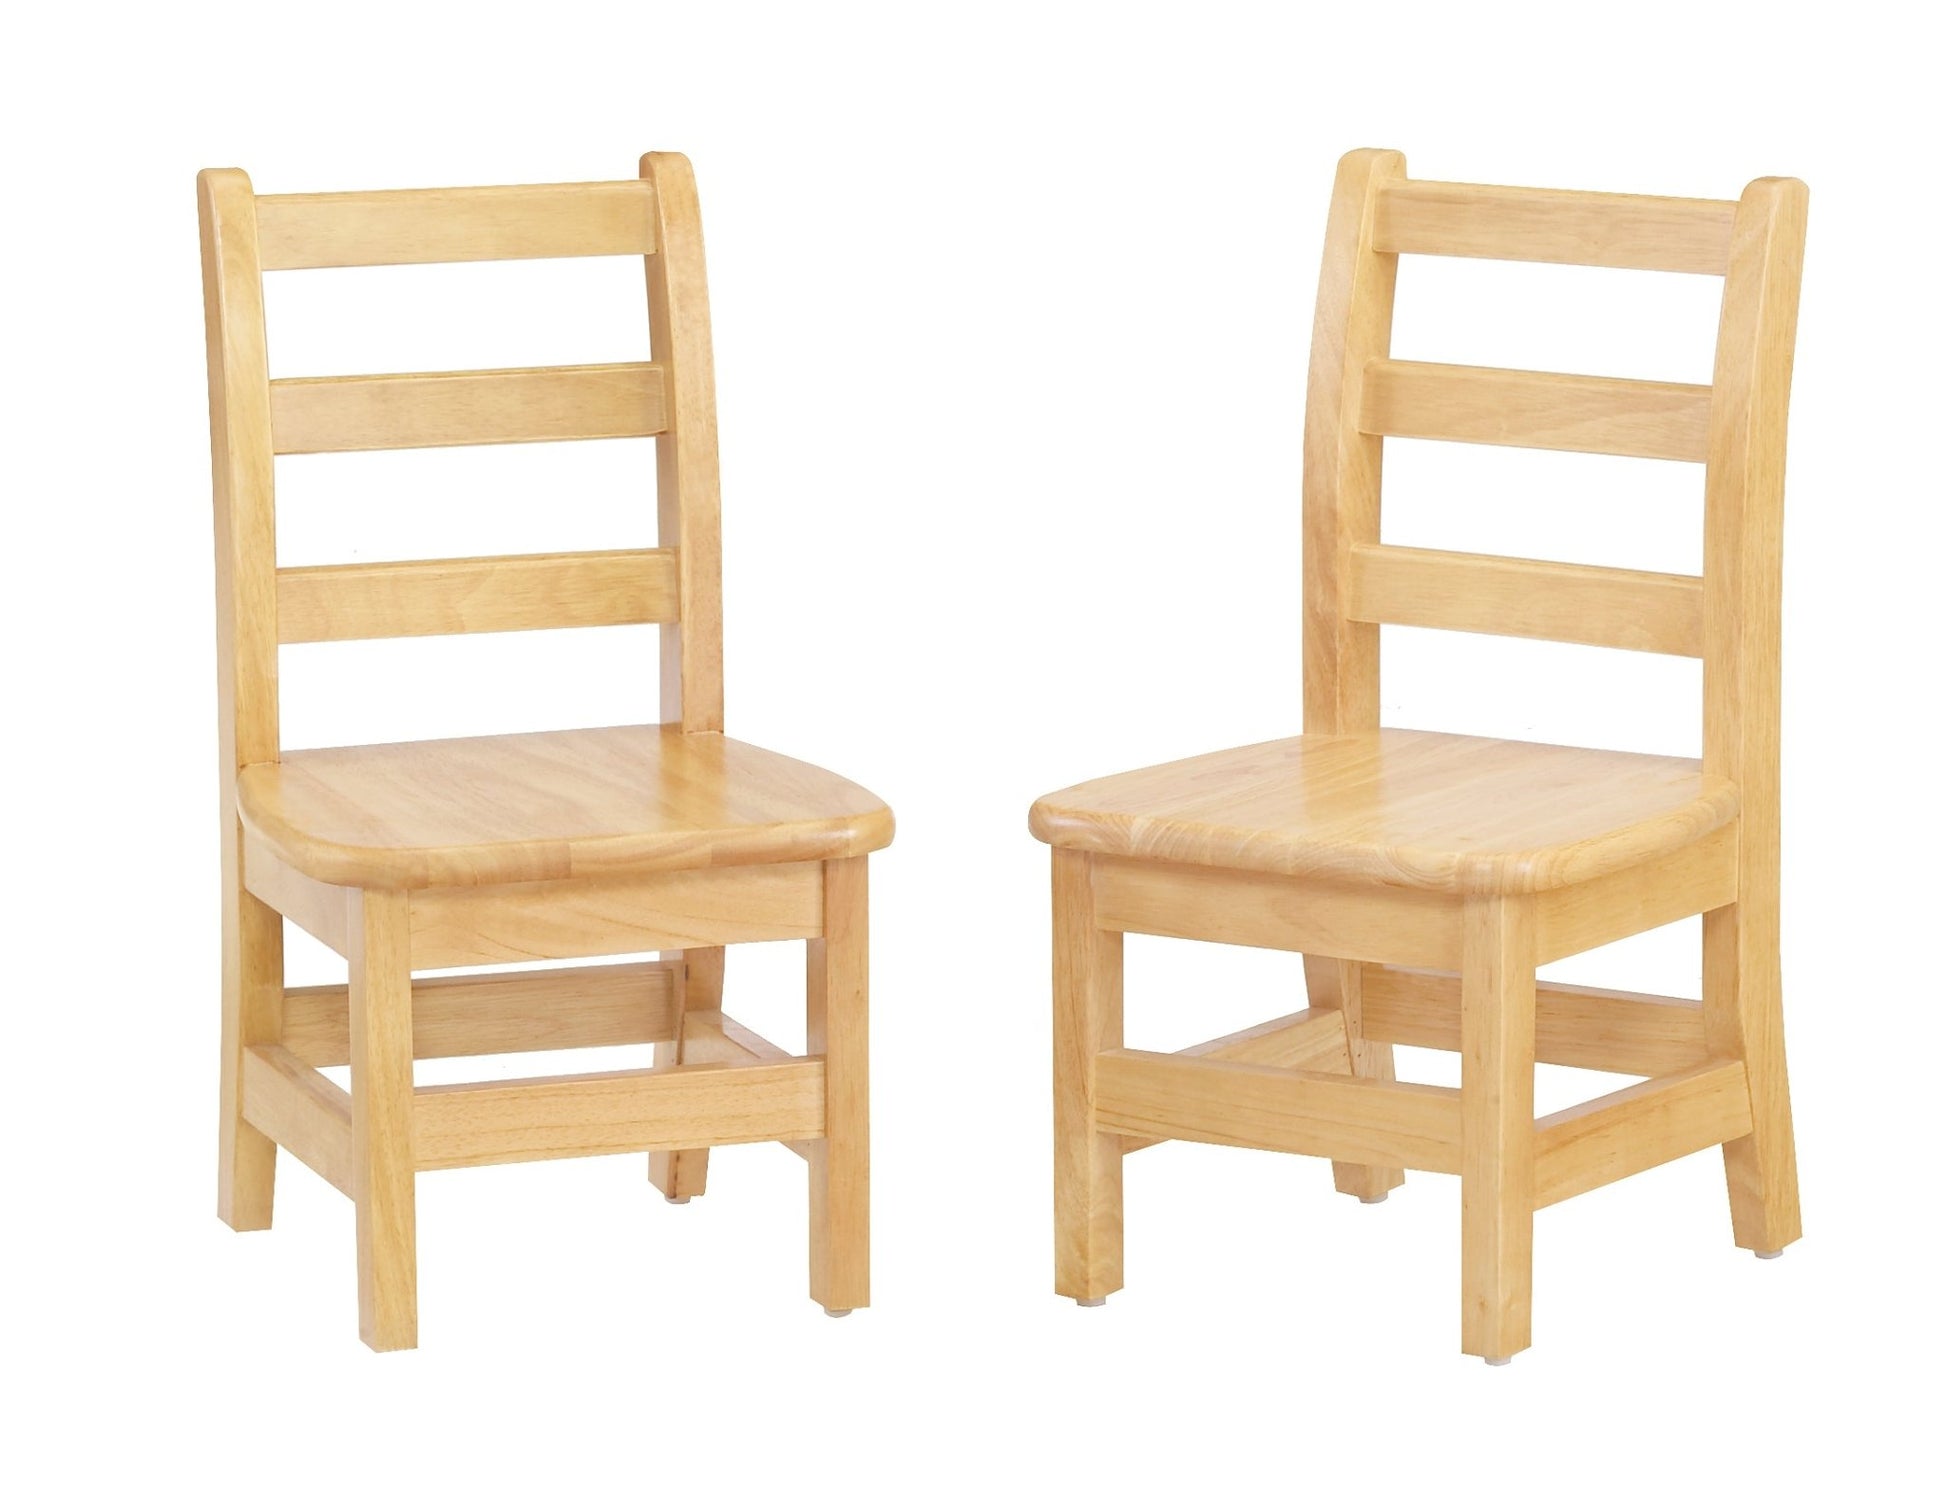 Jonti-Craft Kydz Ladderback Chair 14" (Jonti-Craft JON-5914JC) - SchoolOutlet